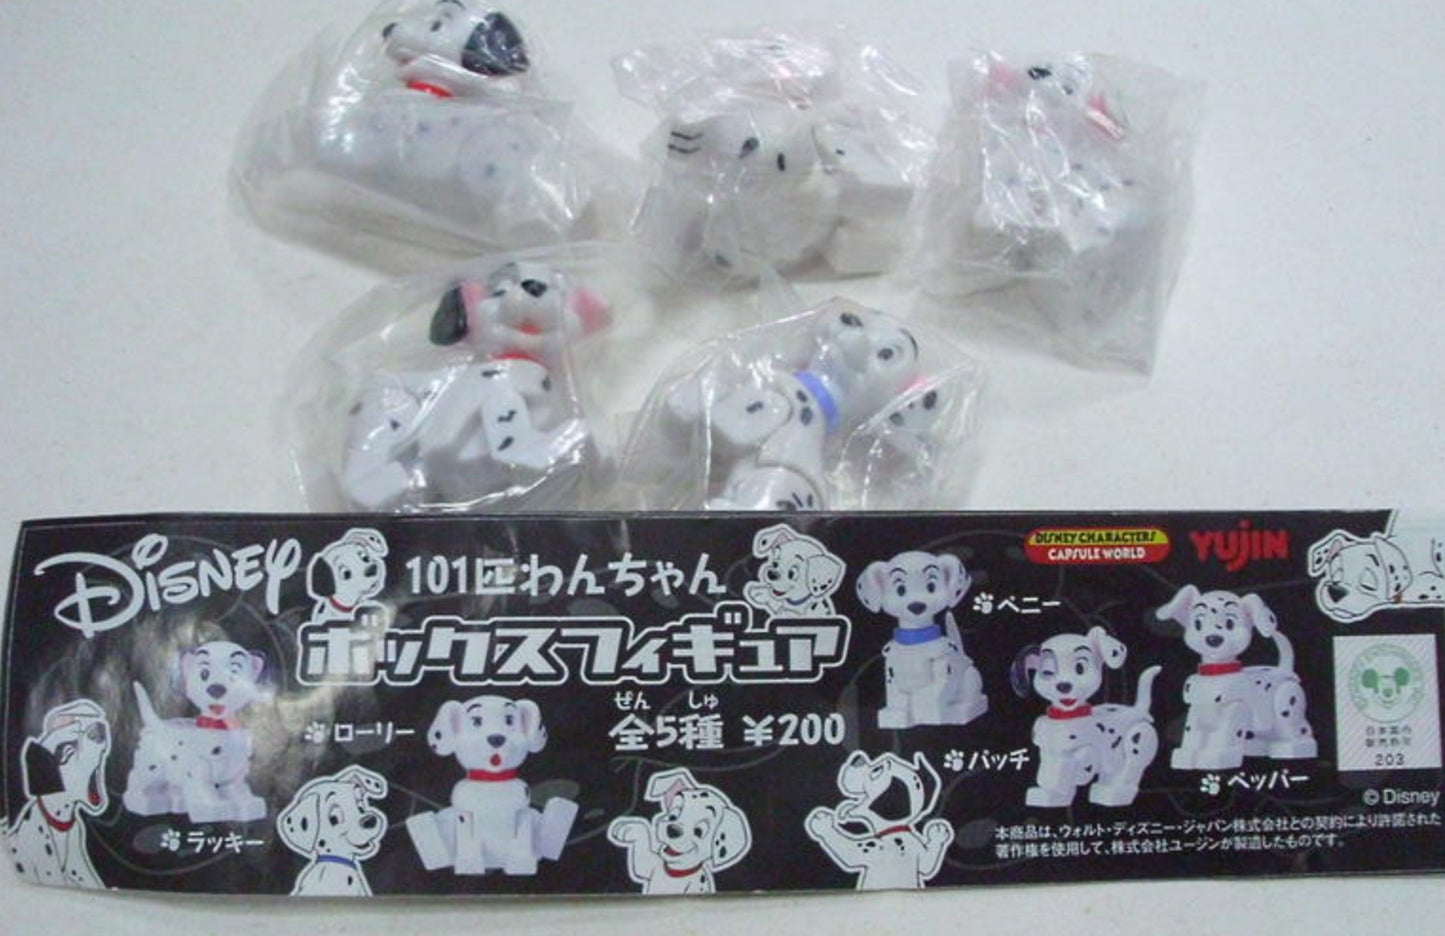 Yujin Disney Characters 101 Dalmatians Gashapon Kubrick Style 5 Mini Box Figure Set